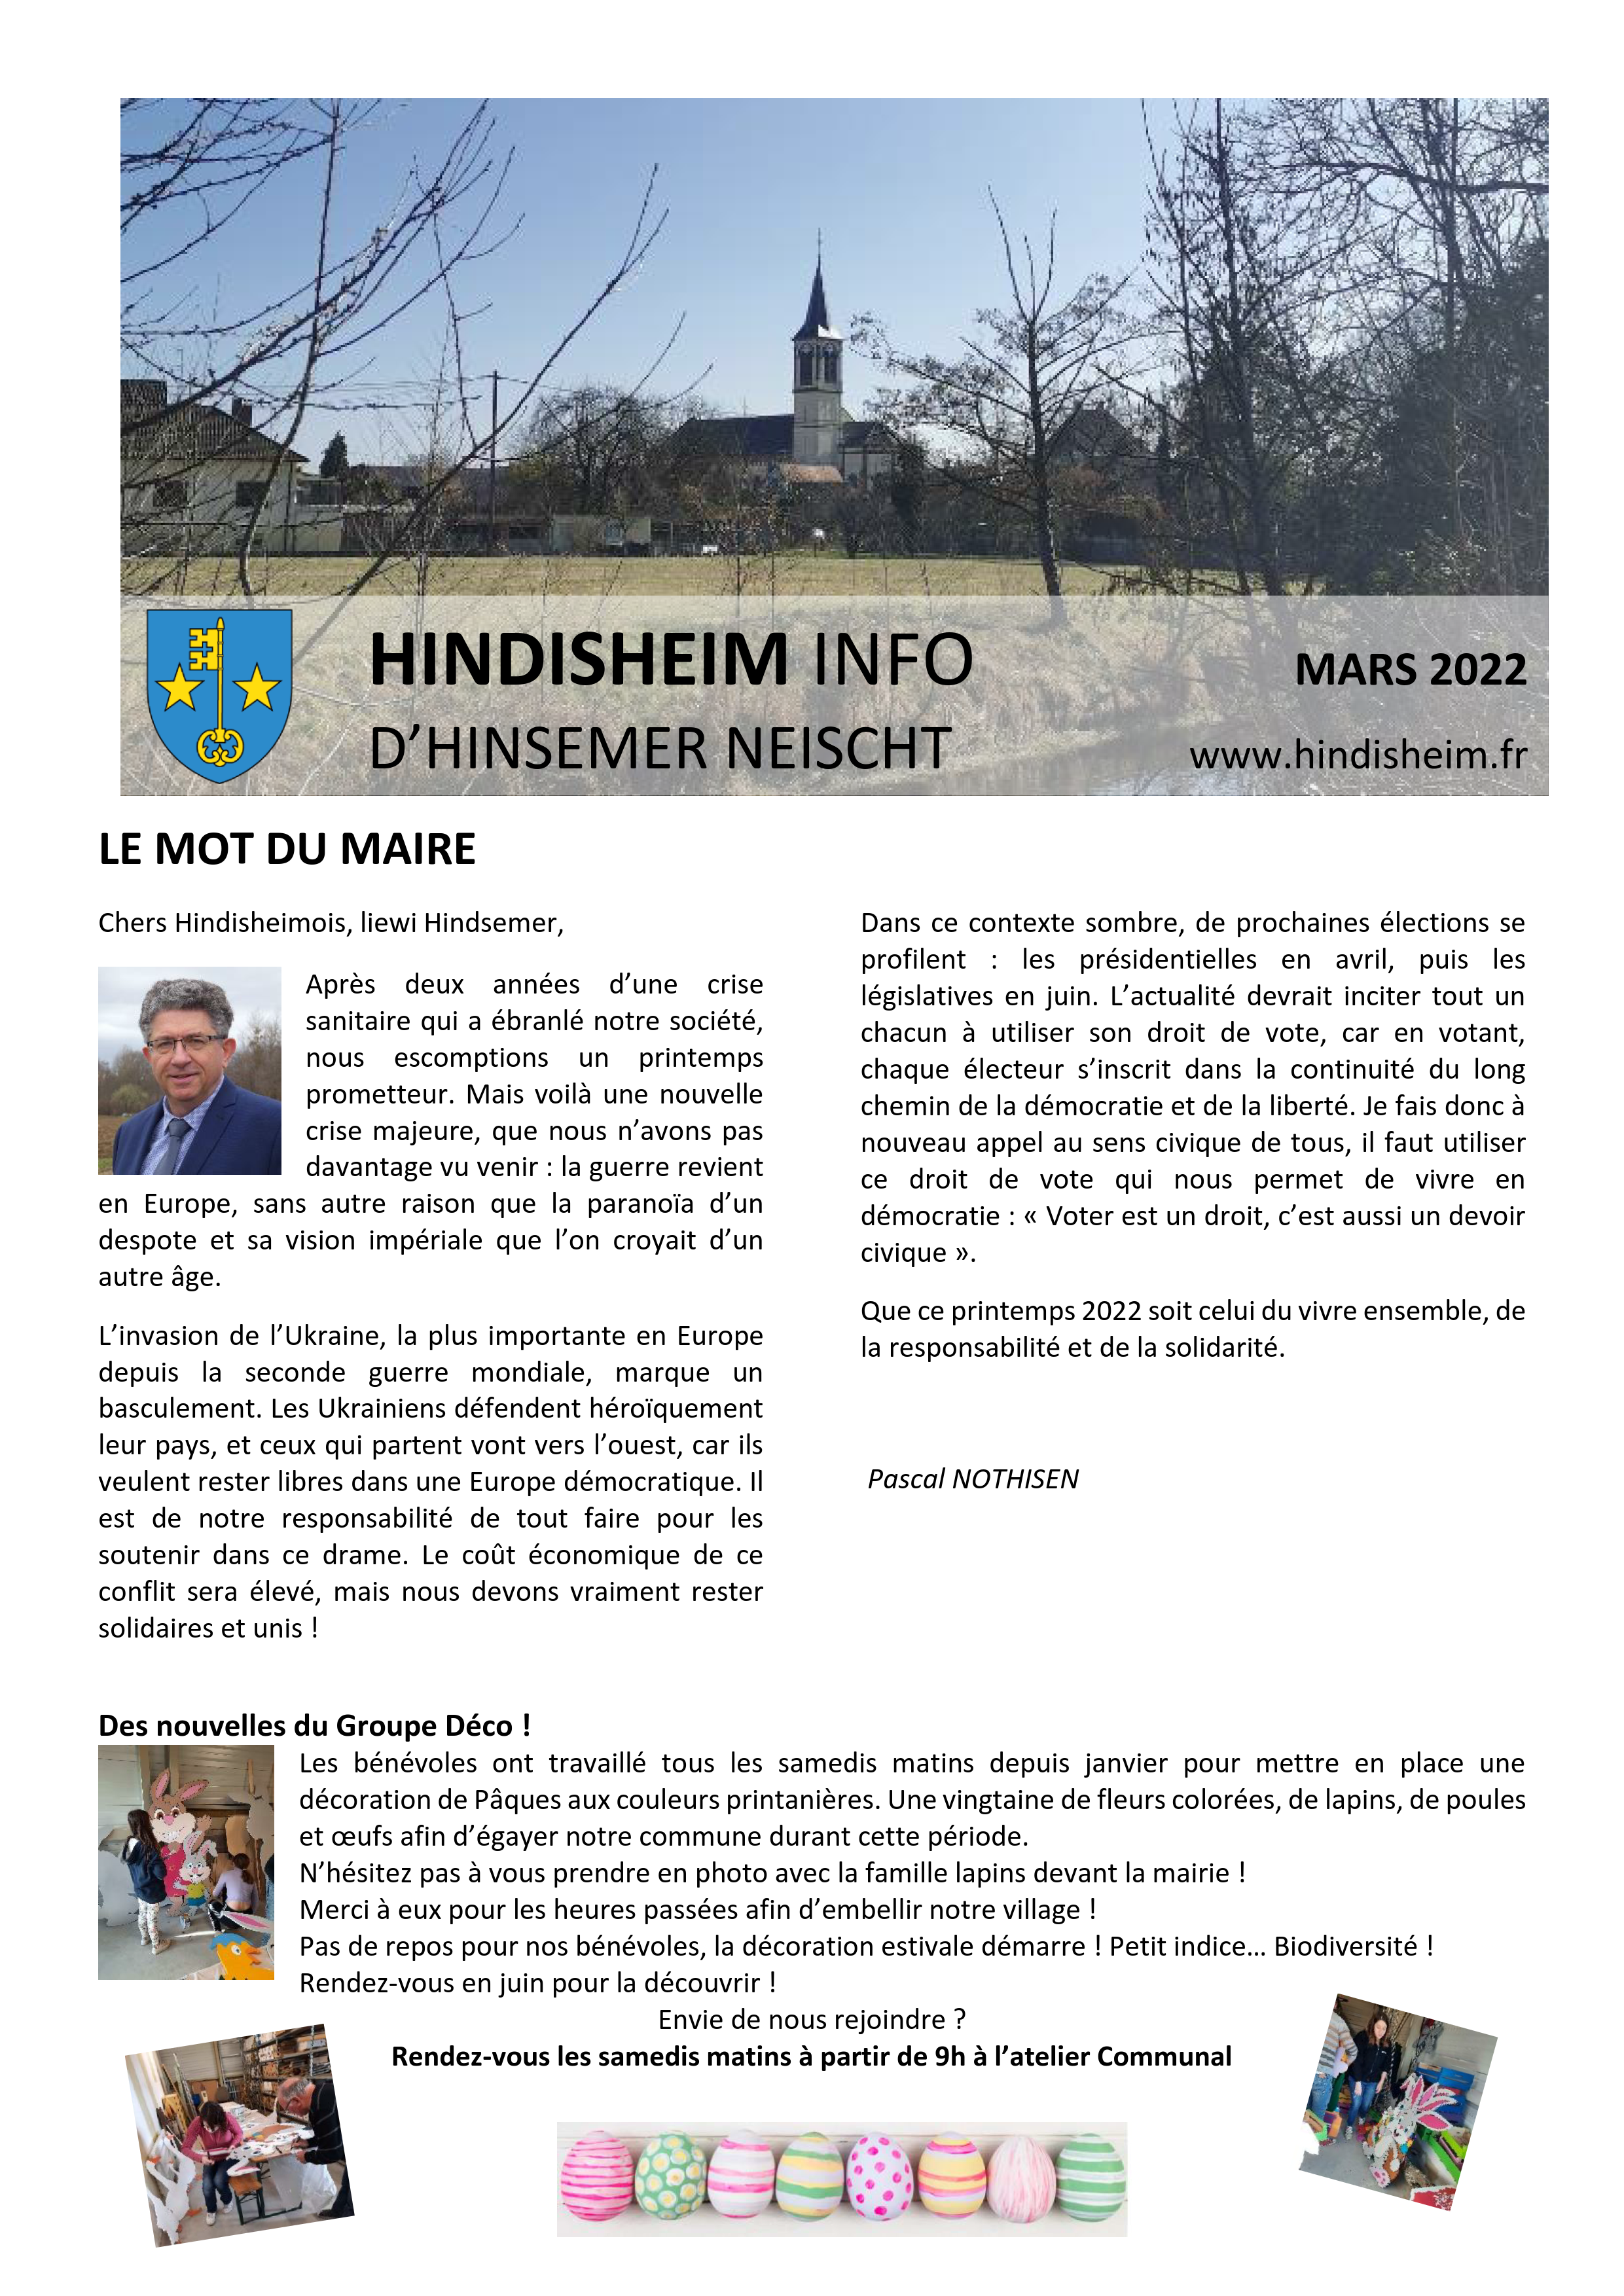 Hindisheim Info mars 2022